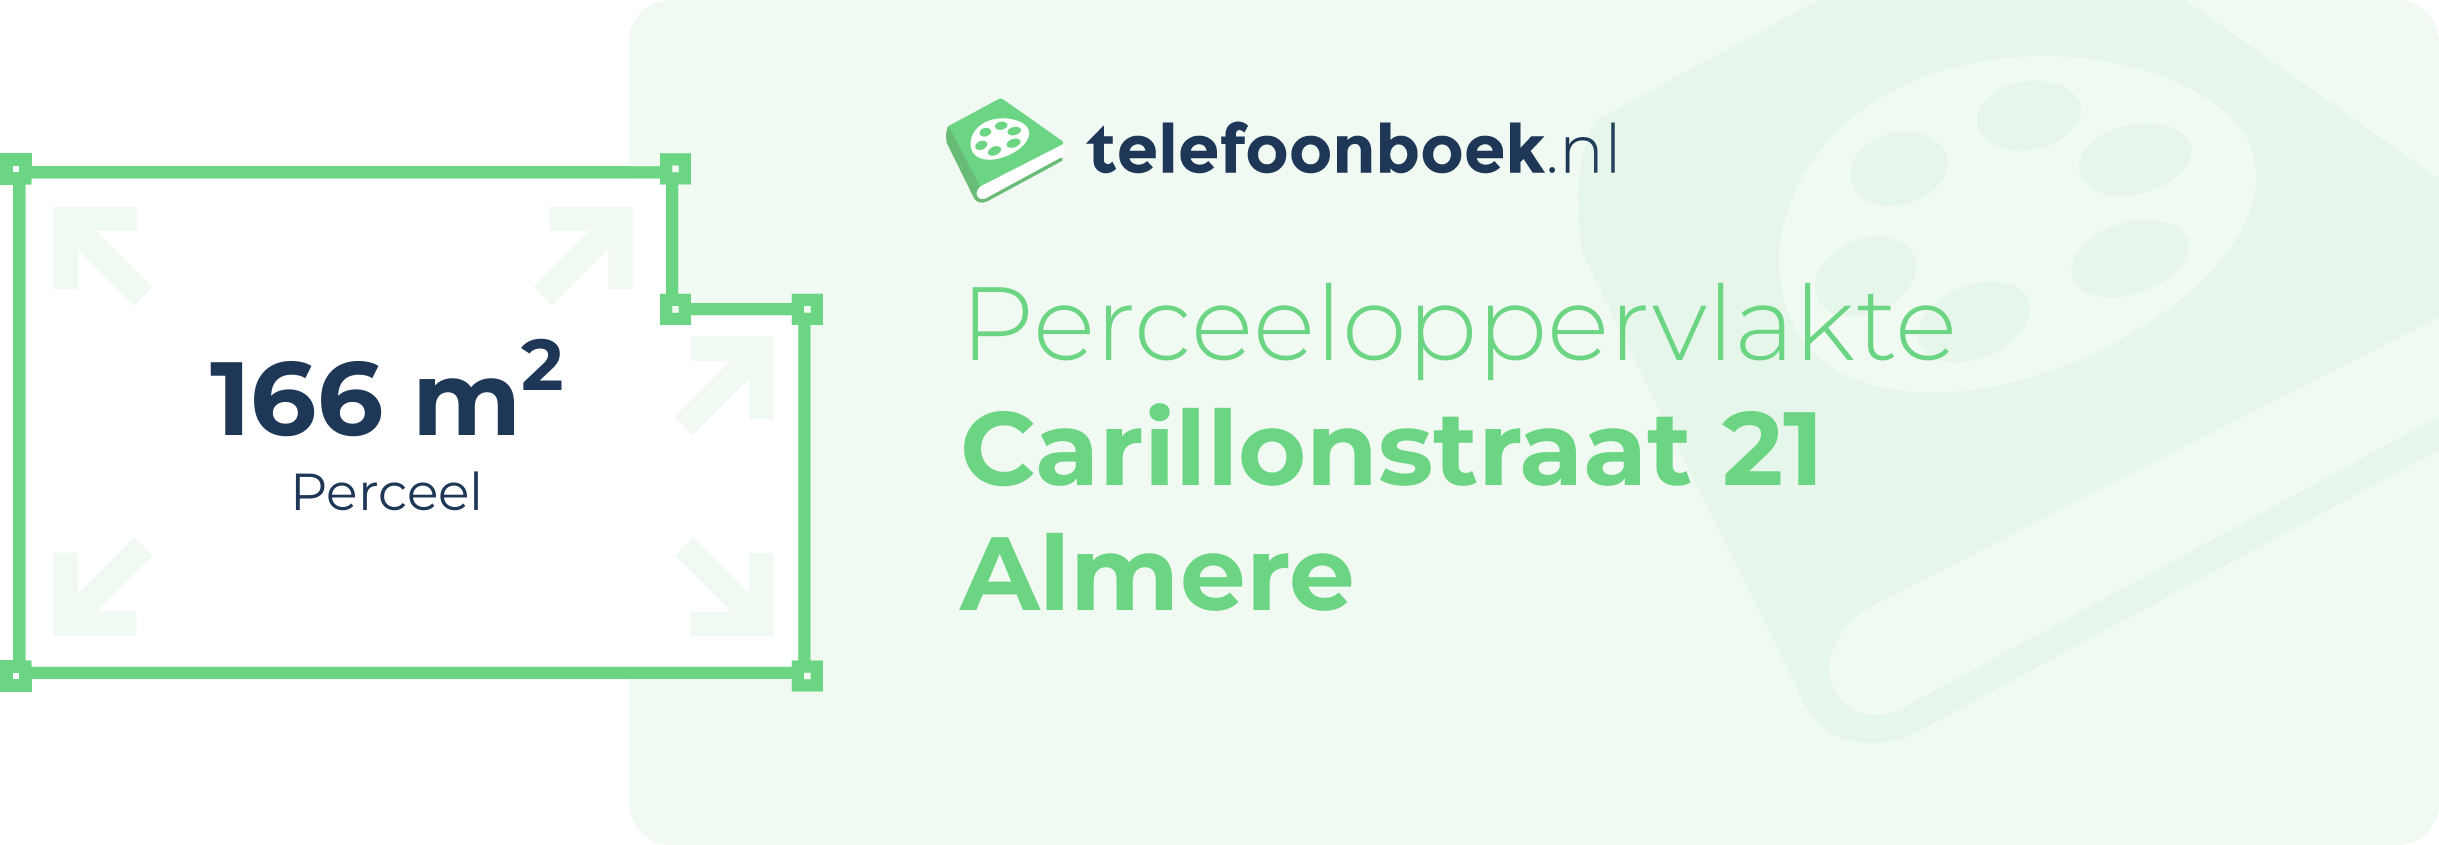 Perceeloppervlakte Carillonstraat 21 Almere